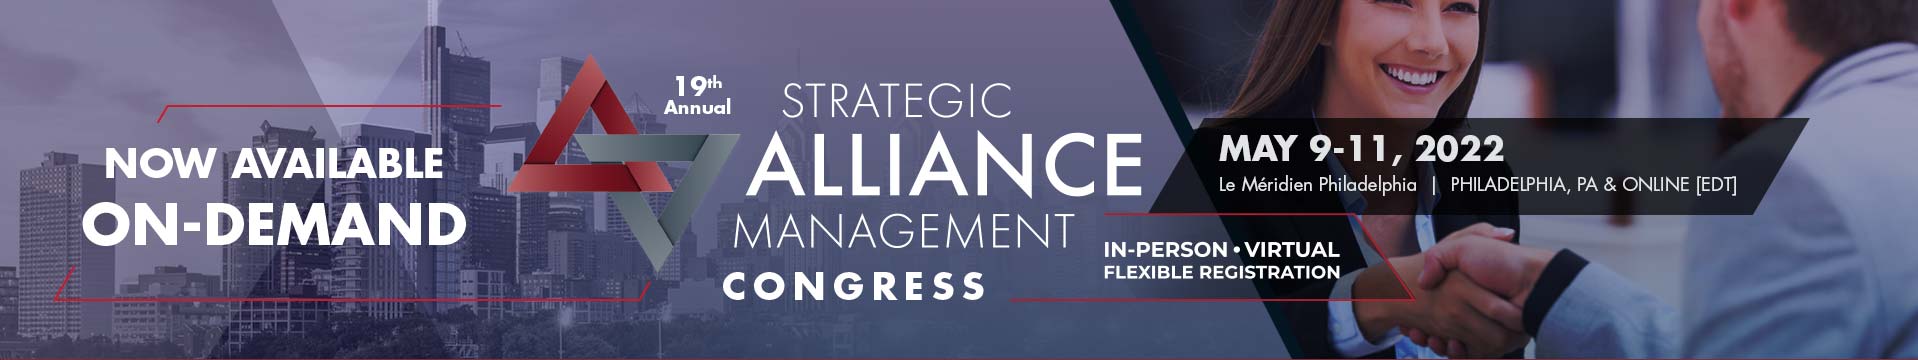 Atrategic Alliance Management Congress - May 9-11, 2022